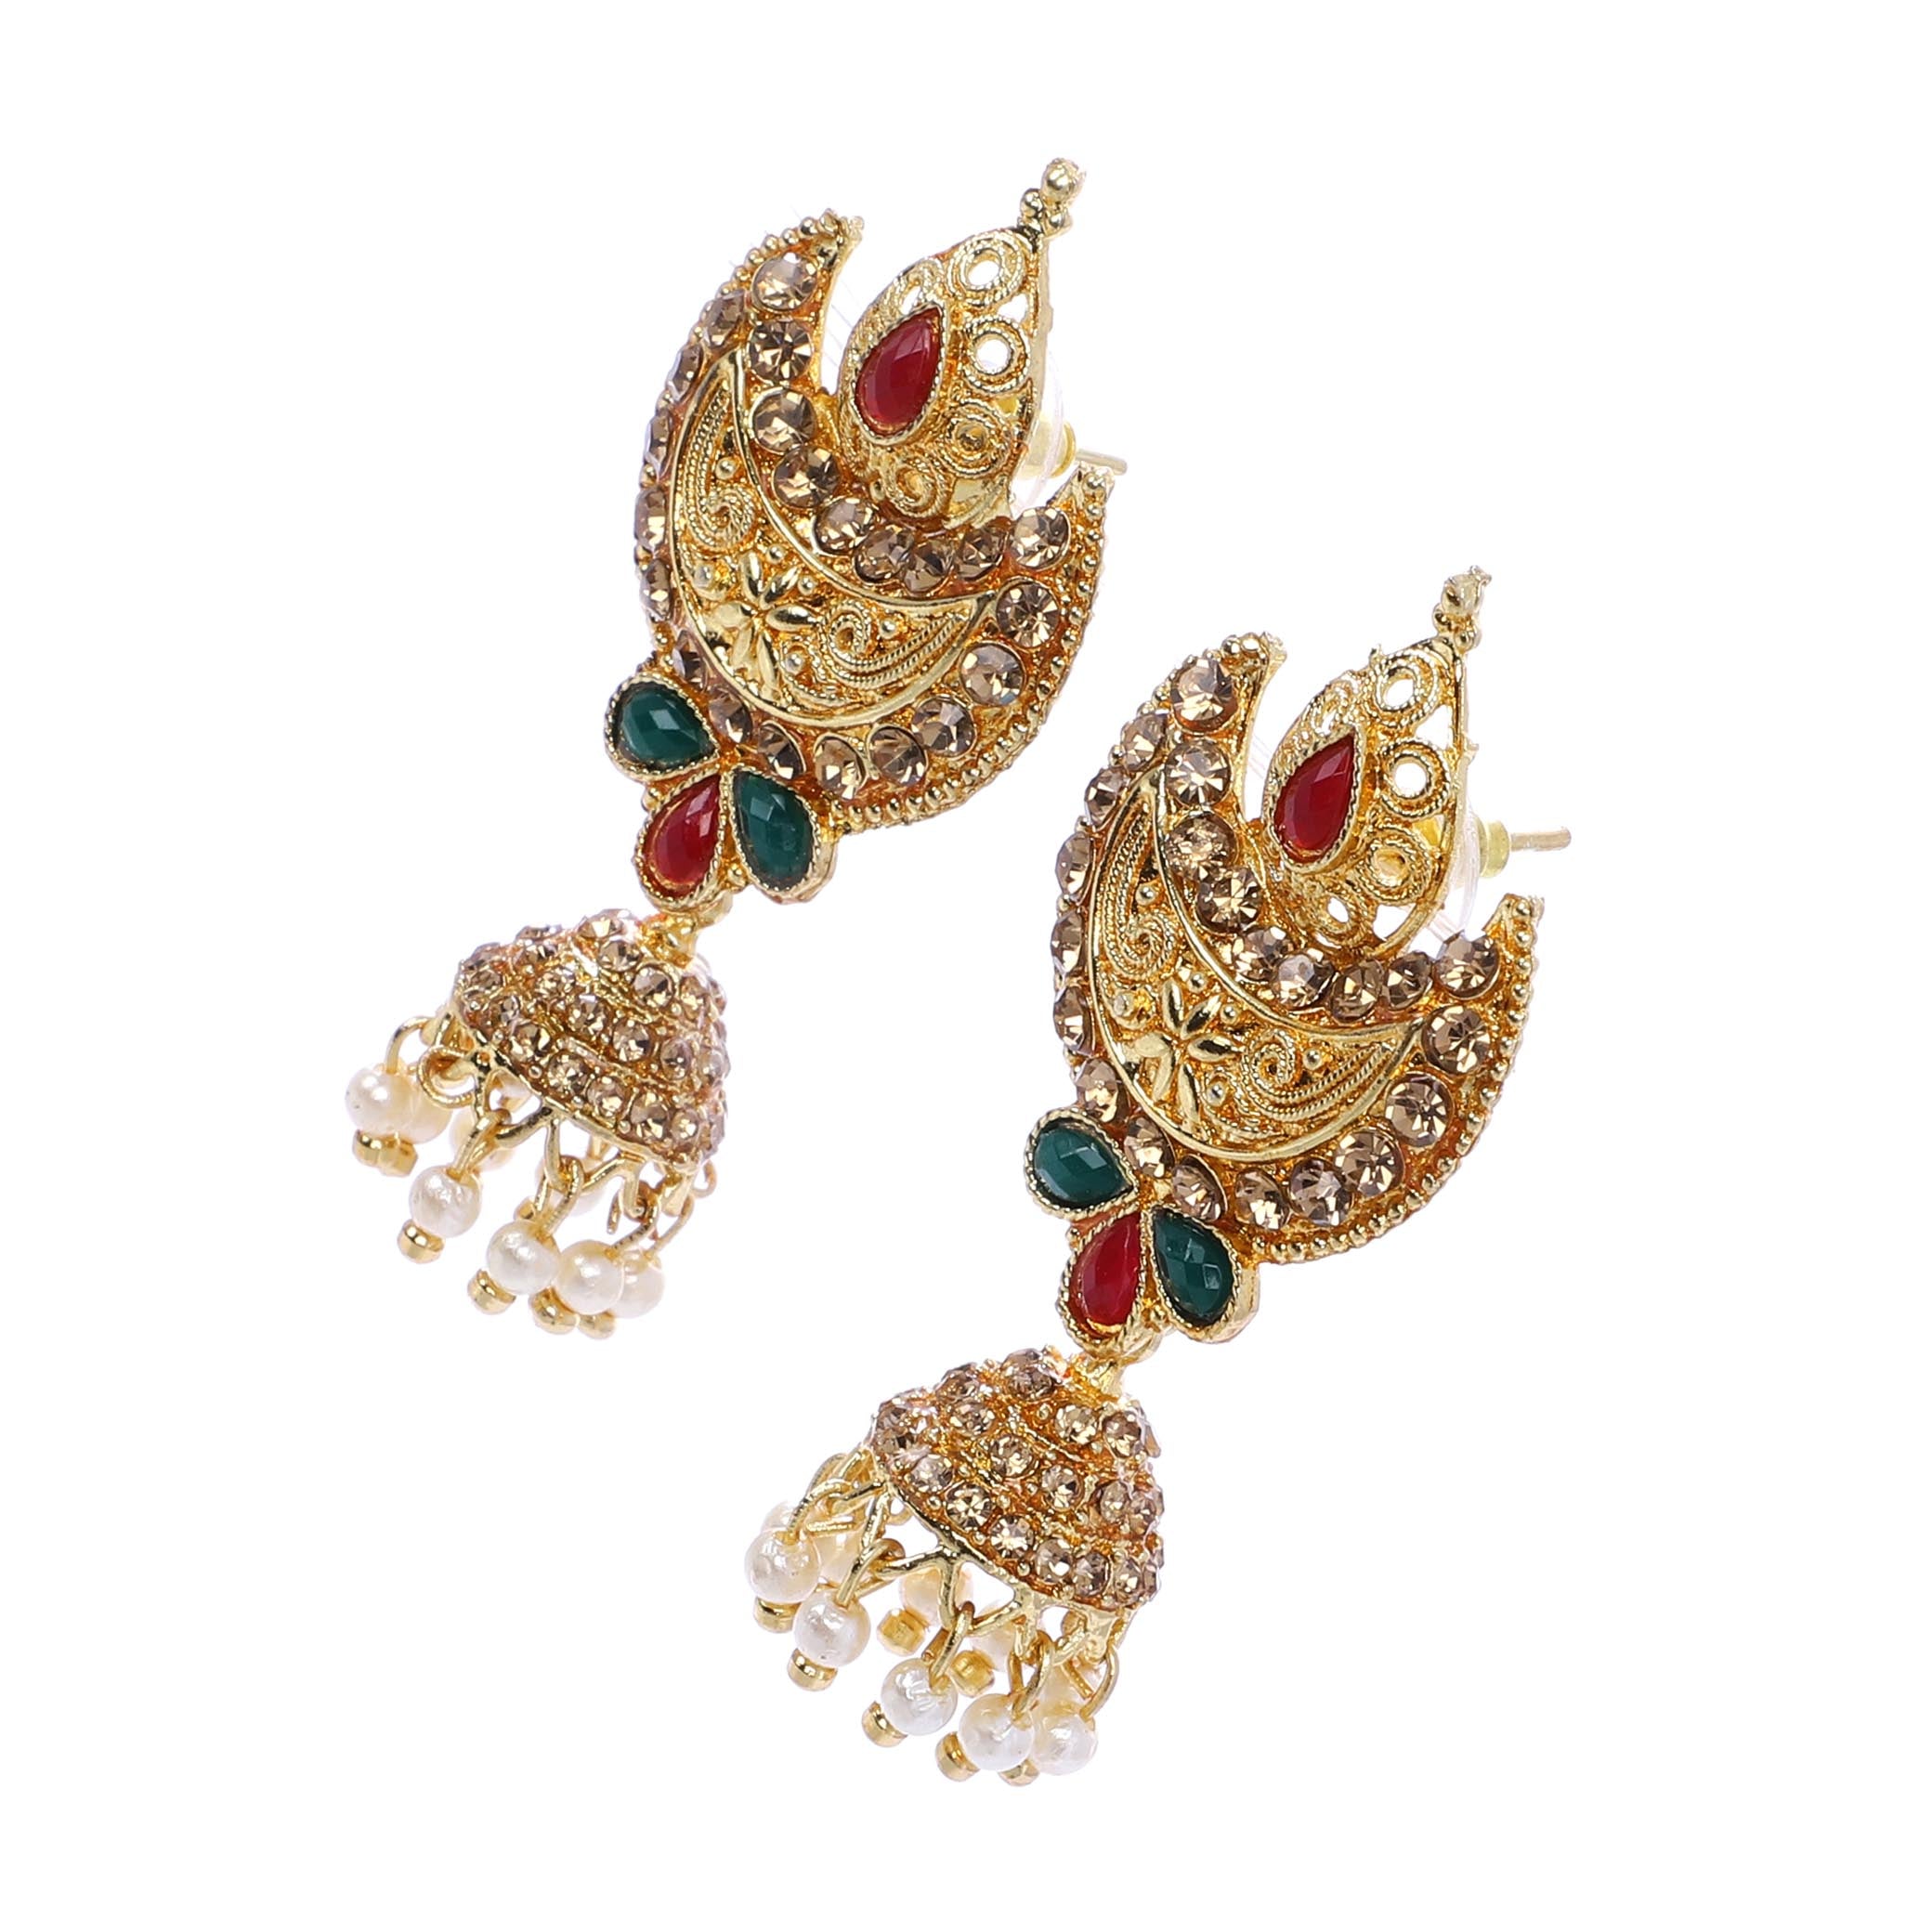 Indian Jewellery from Meira Jewellery:Earrings,Trendy Golden Pearl Moon Design LCD Stone Jhumki Style Earring